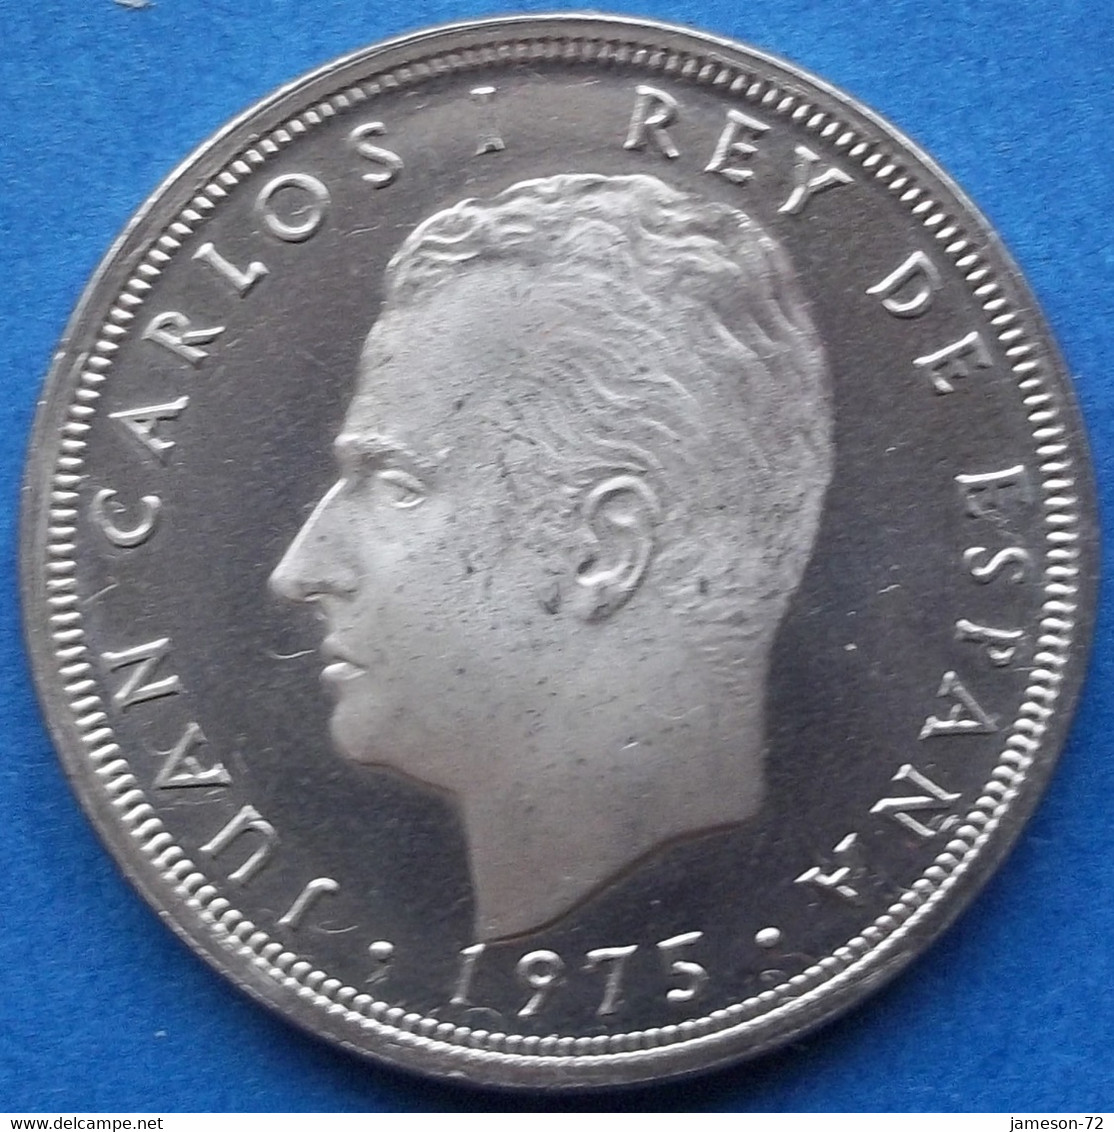 SPAIN - 50 Pesetas 1975 *76 KM# 809 Juan Carlos I (1975-2014) - Edelweiss Coins - 50 Pesetas